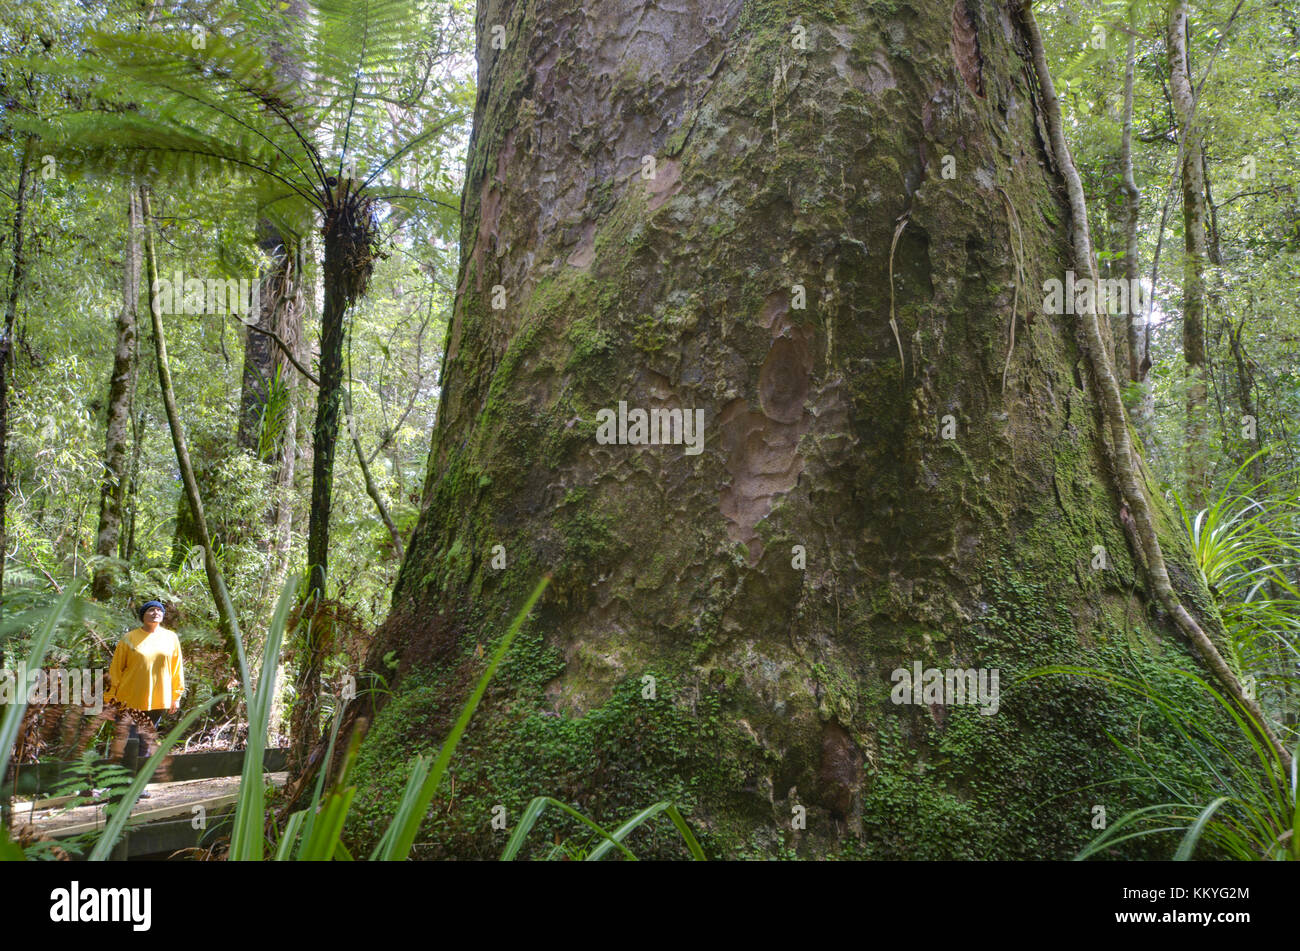 Woman admiring a giant Kauri tree in Trounson Karui Park, Northland, New Zealand Stock Photo